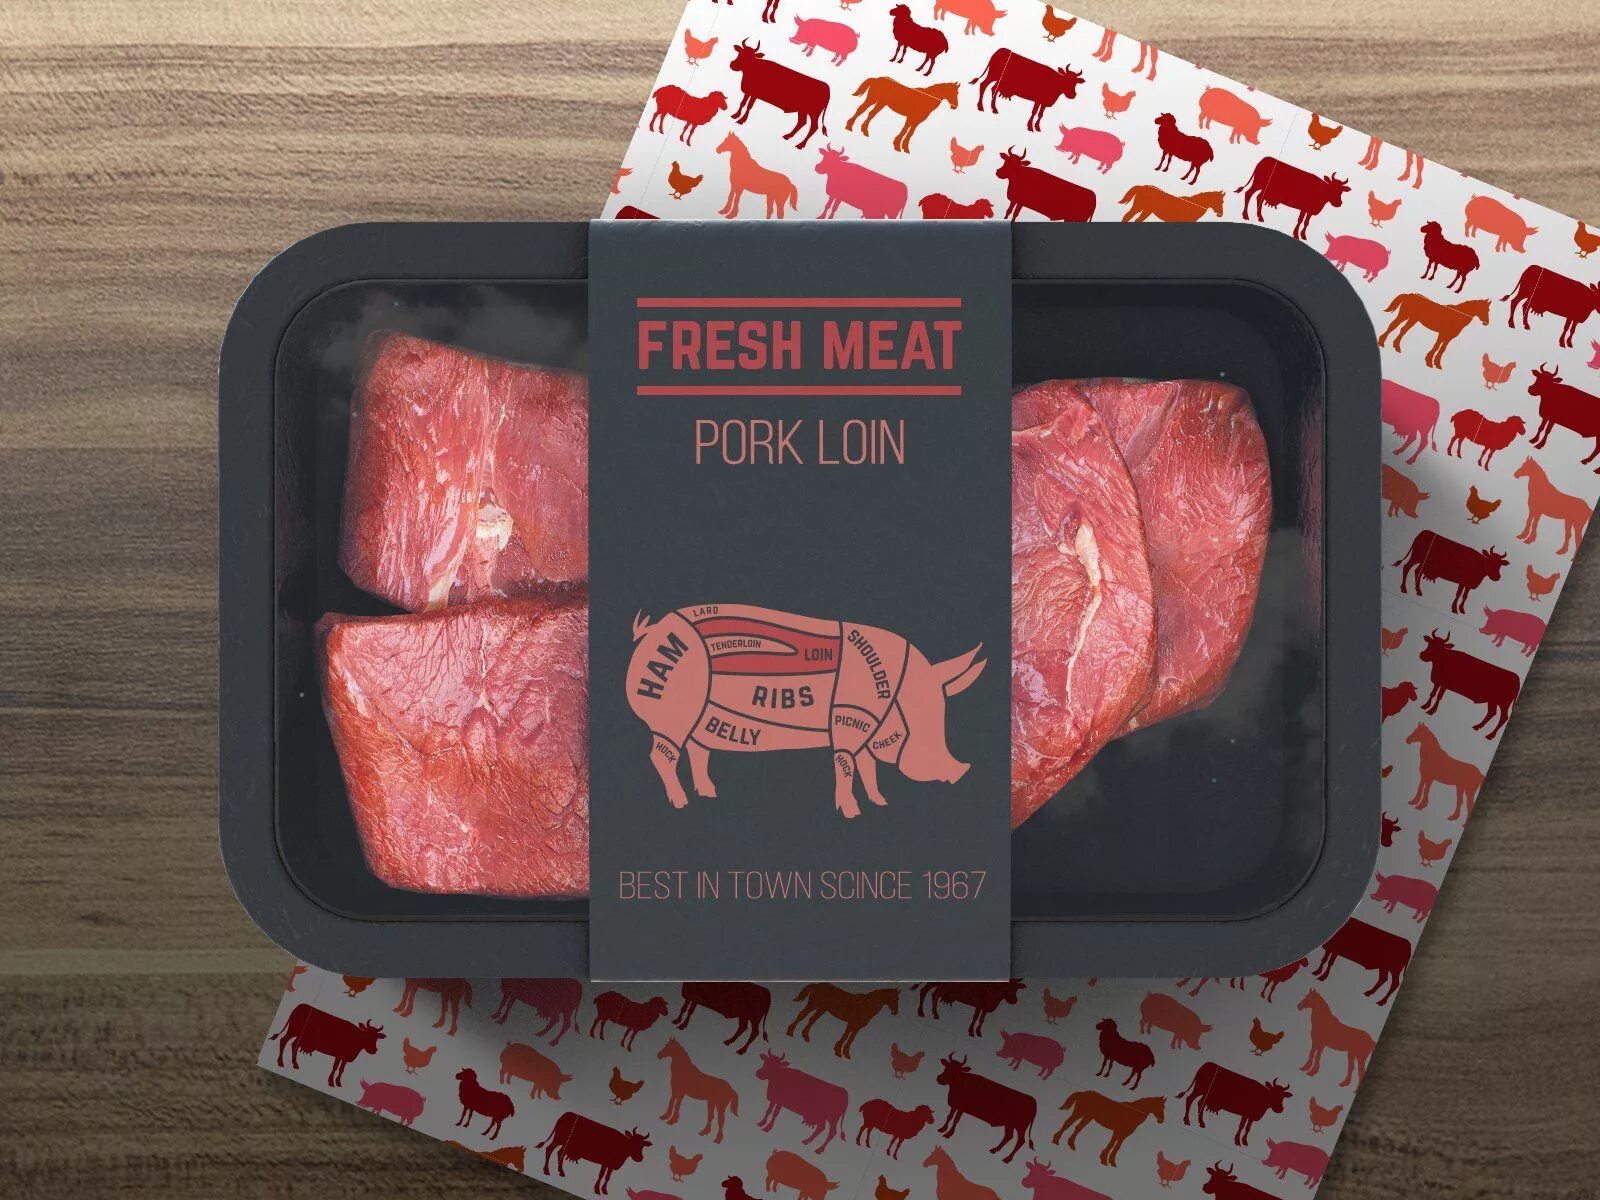 Мясо в упаковке. Упаковка мясной продукции. Современная упаковка мяса. Мокап упаковка мяса.